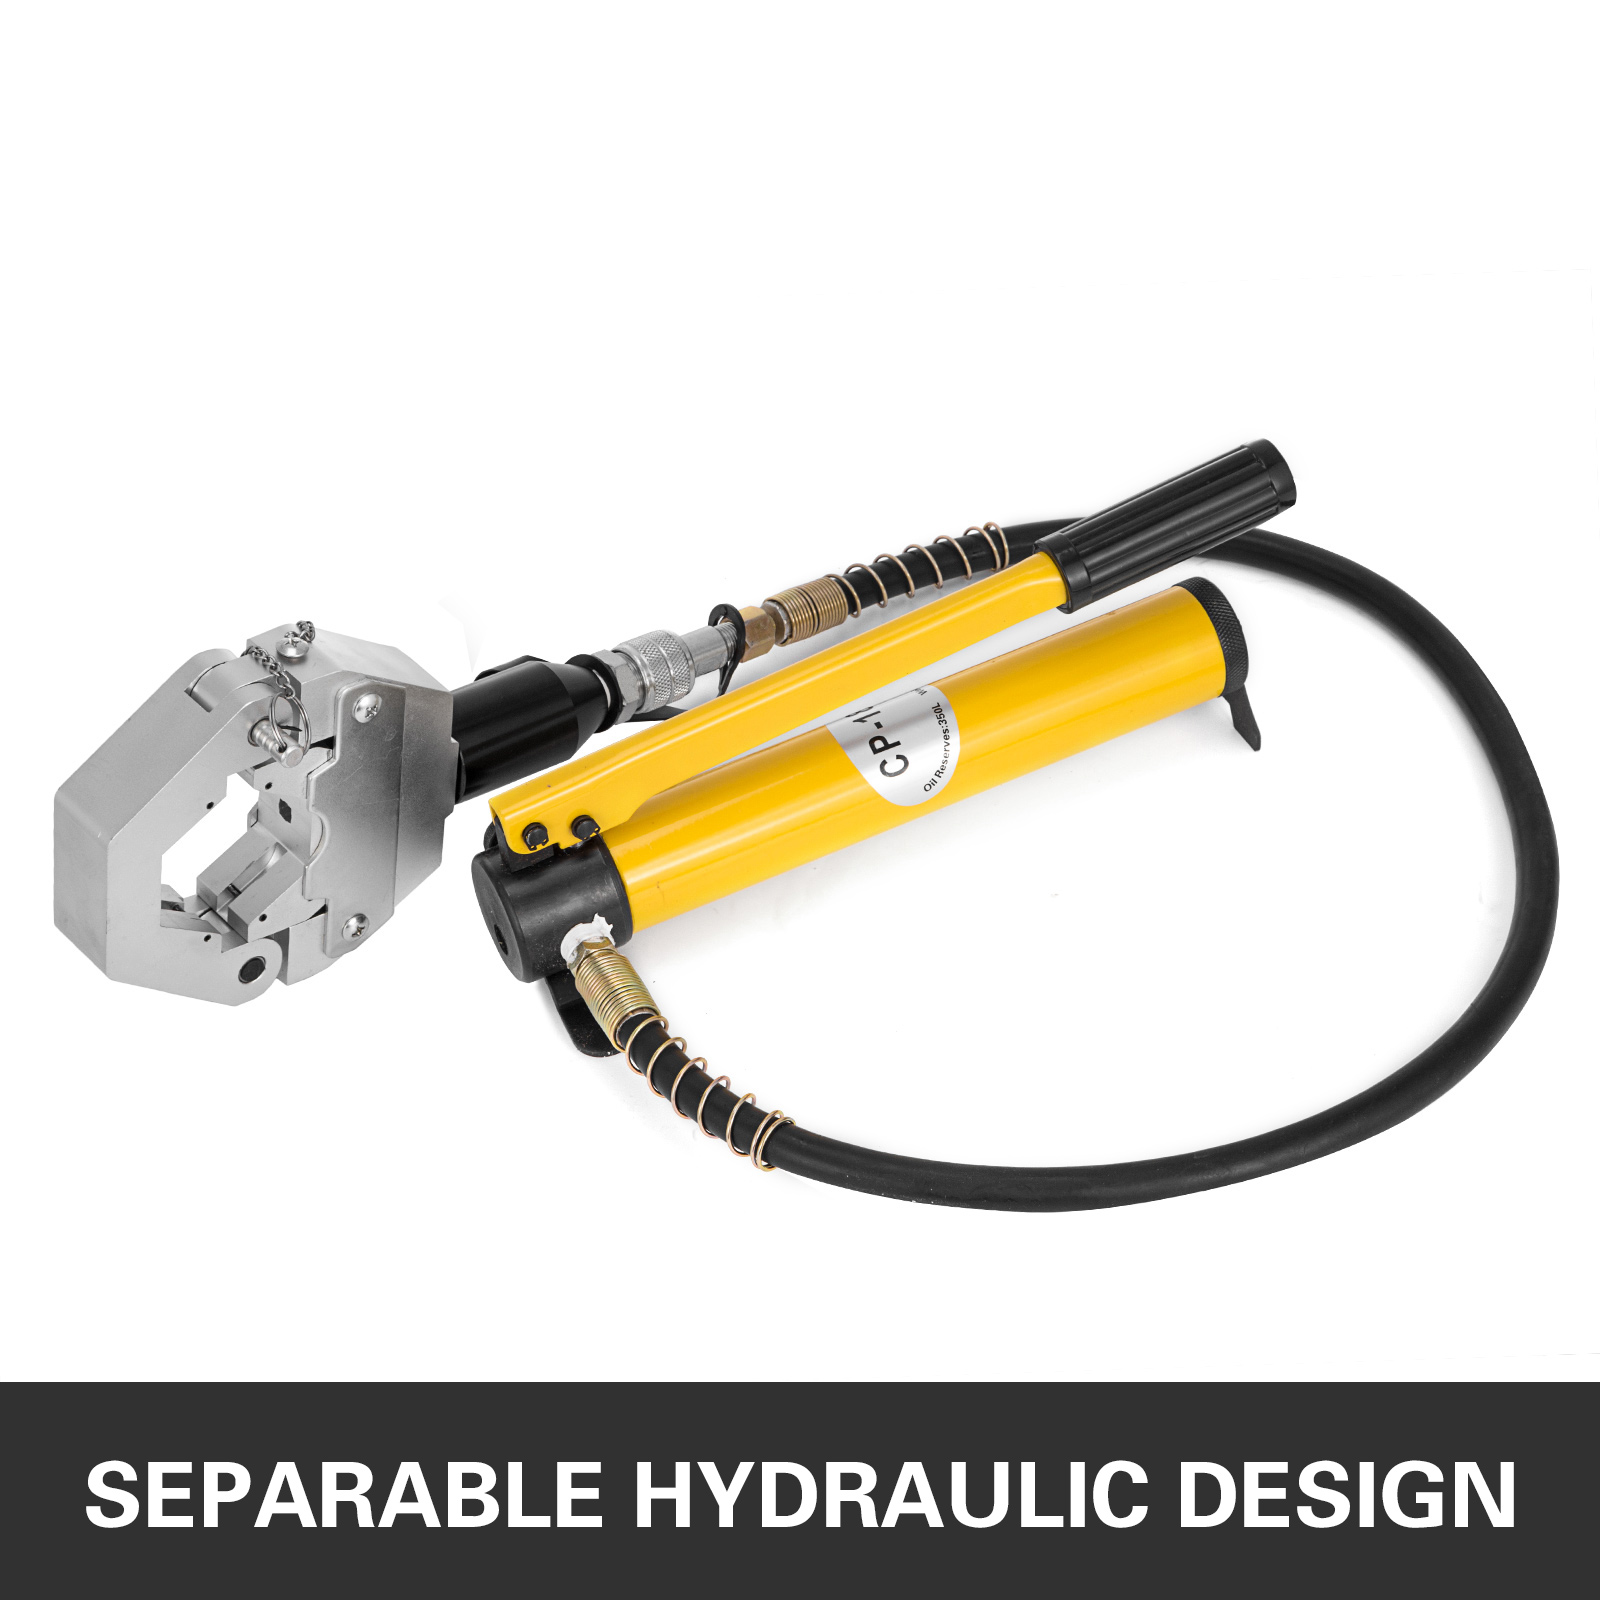 VEVOR 7842B Hydraulic Hose Crimper Kit PVC Rubber Hose Crimping Tool Hand Pump 